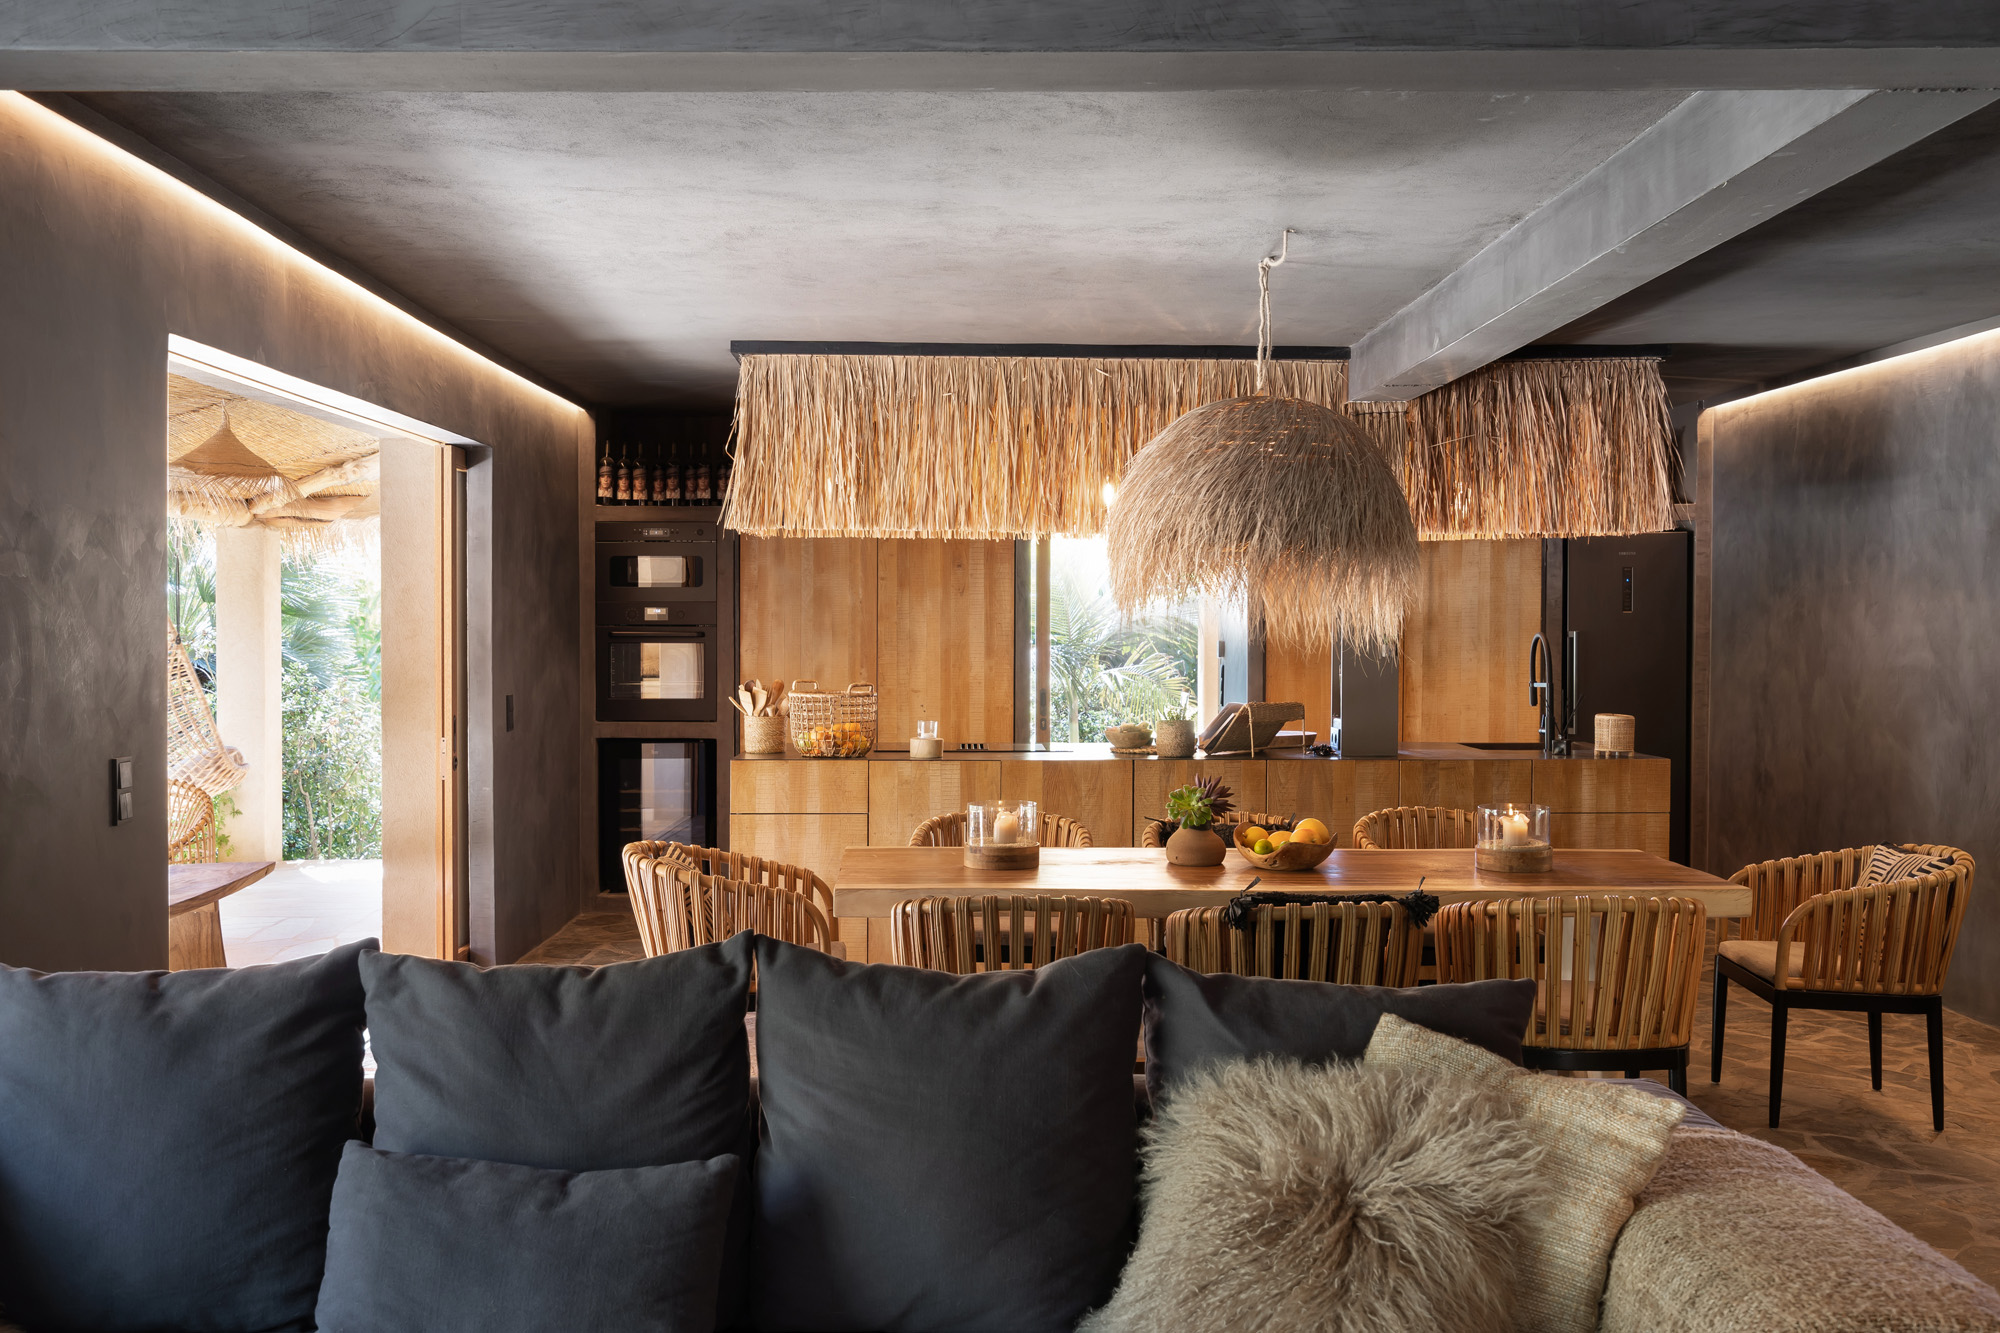 Living room of villa Nomad by Dolores Batselaere